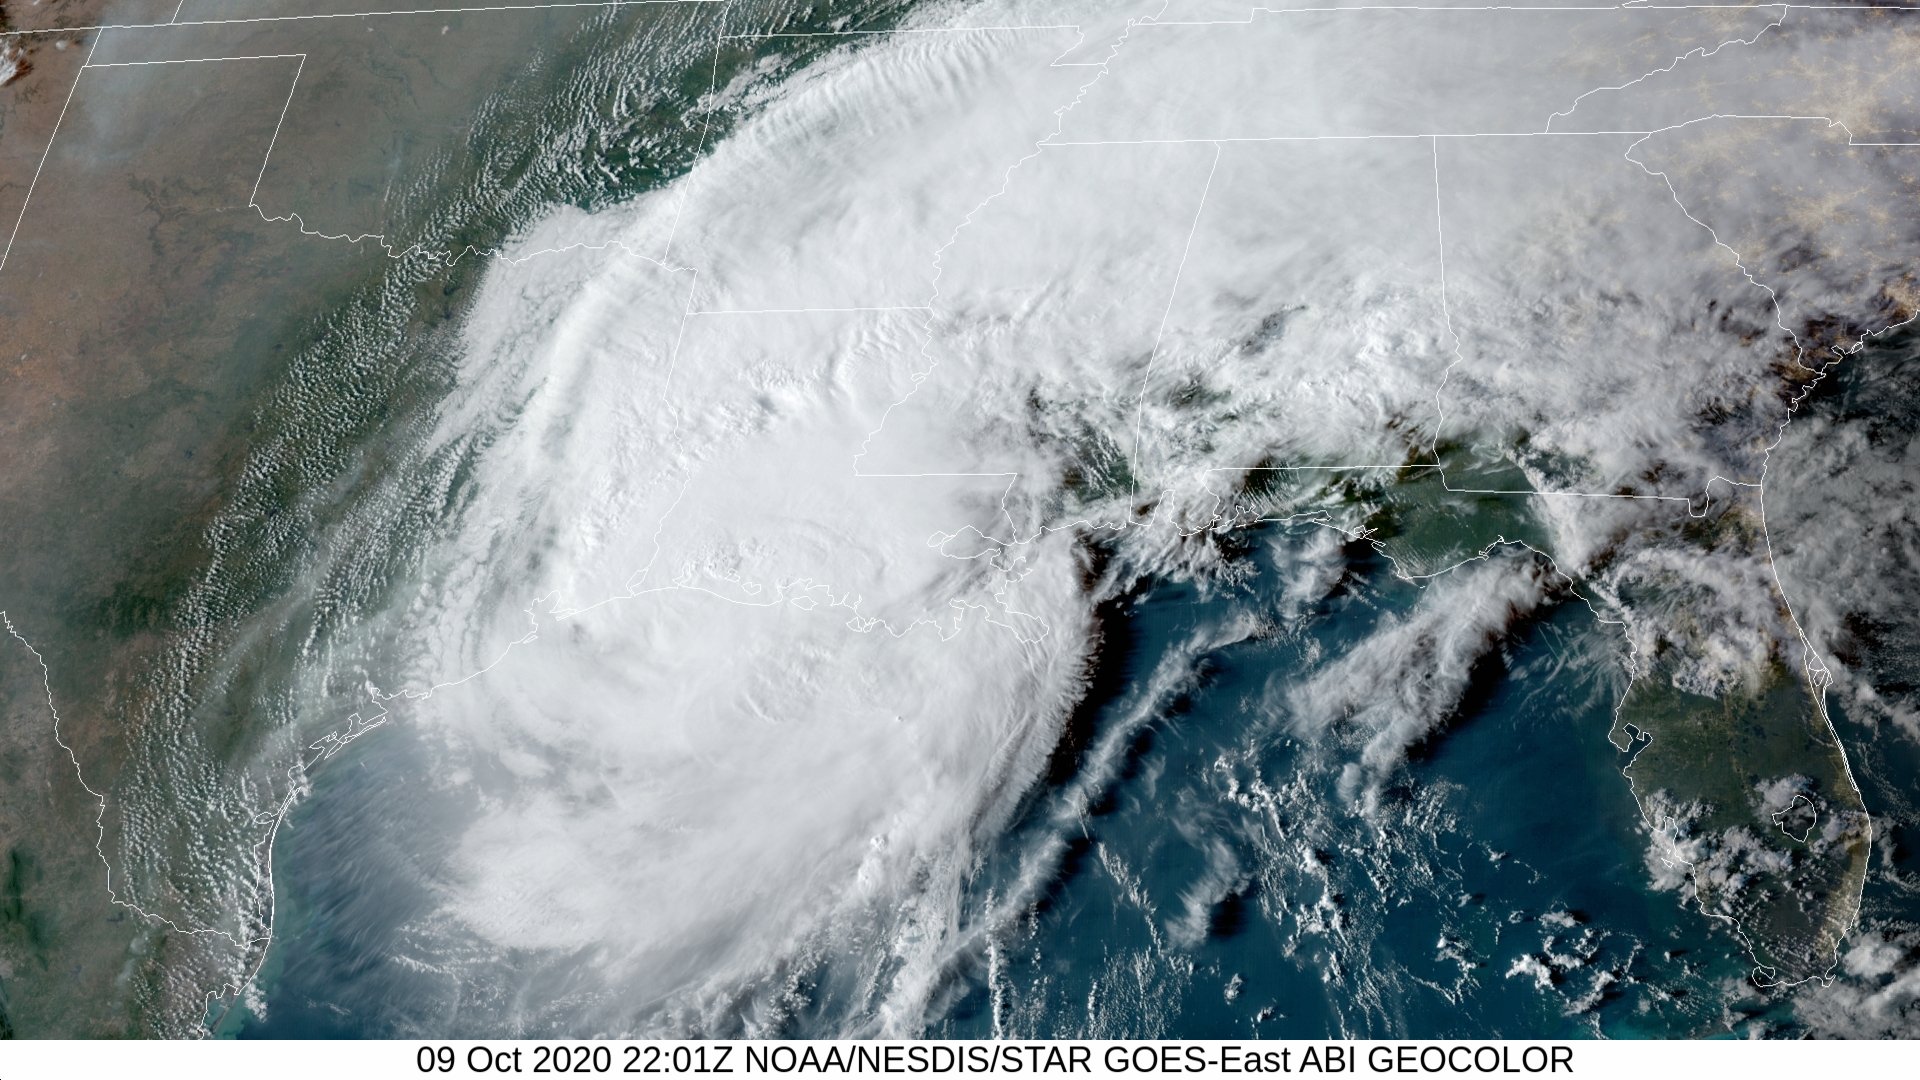 GOES 16 GeoColor Satellite Image of Hurricane Delta at 5:01 PM CDT on October 9, 2020.